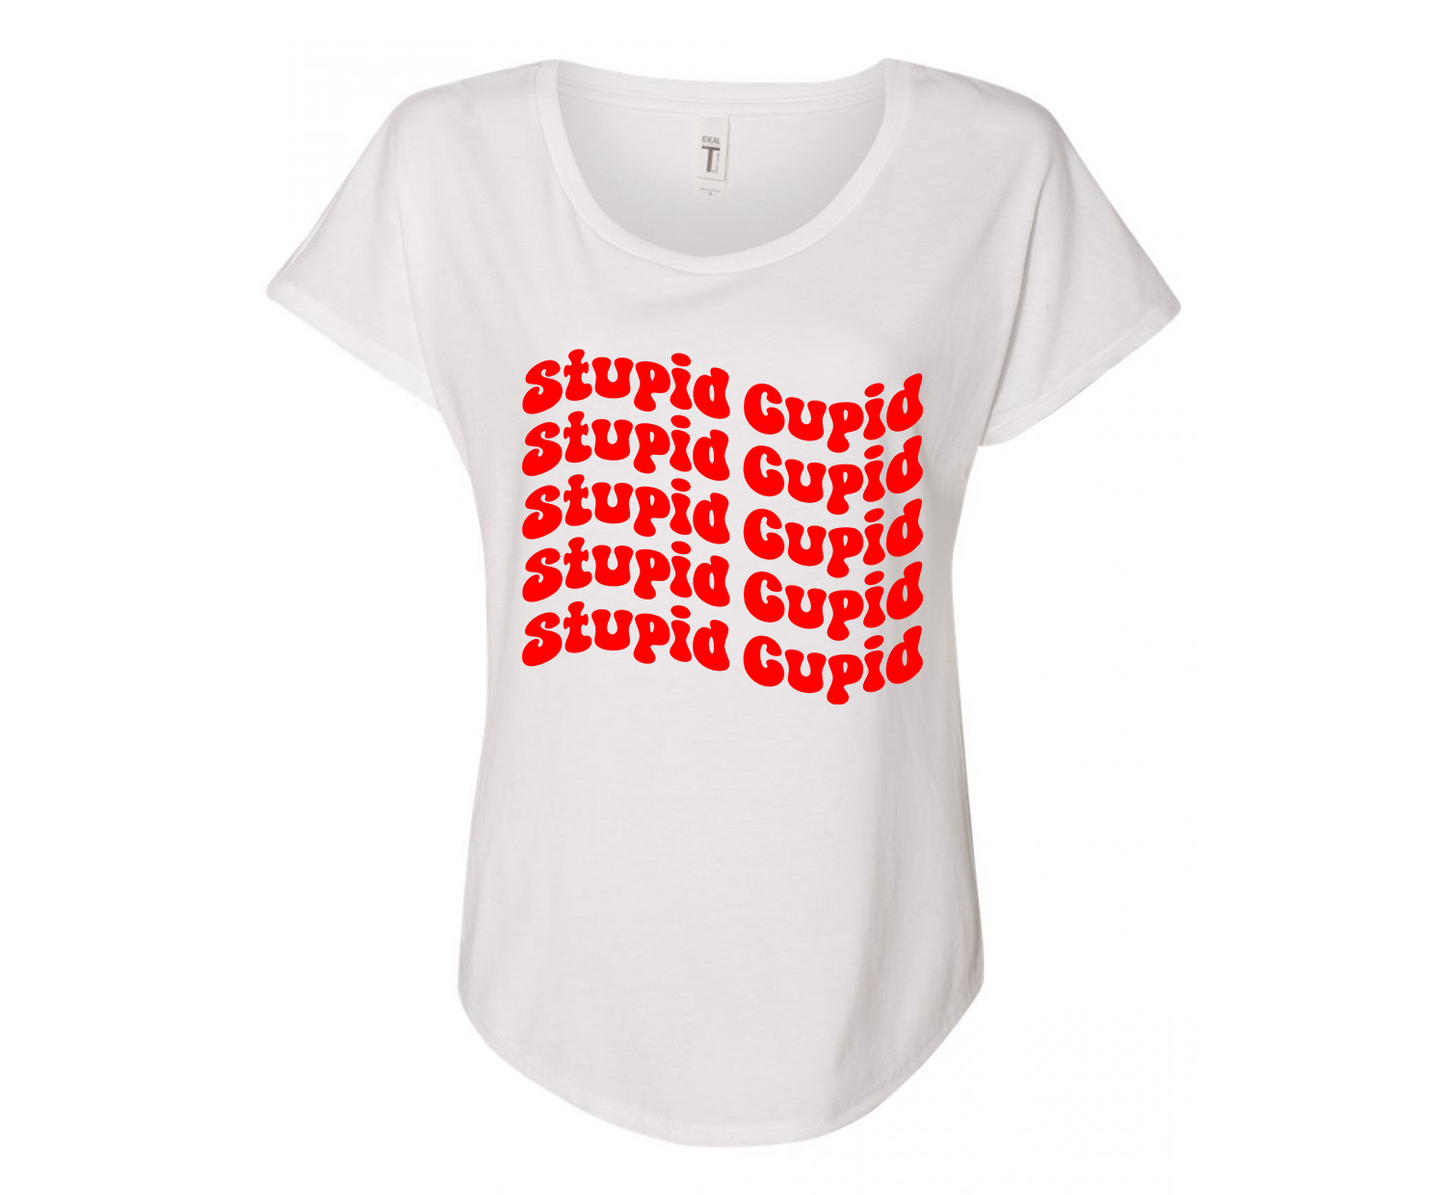 Stupid Cupid Ladies Tee Shirt - In Grey & White